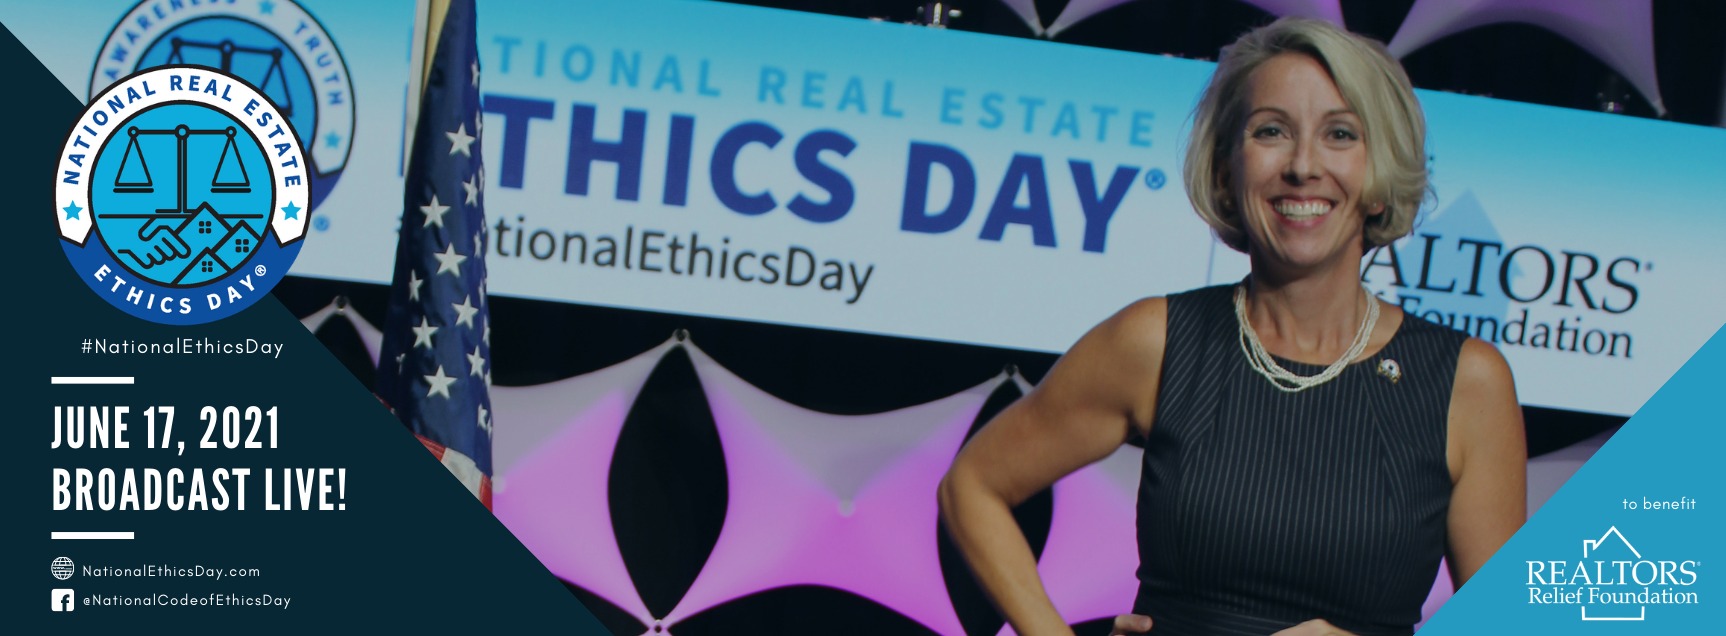 National Ethics Day